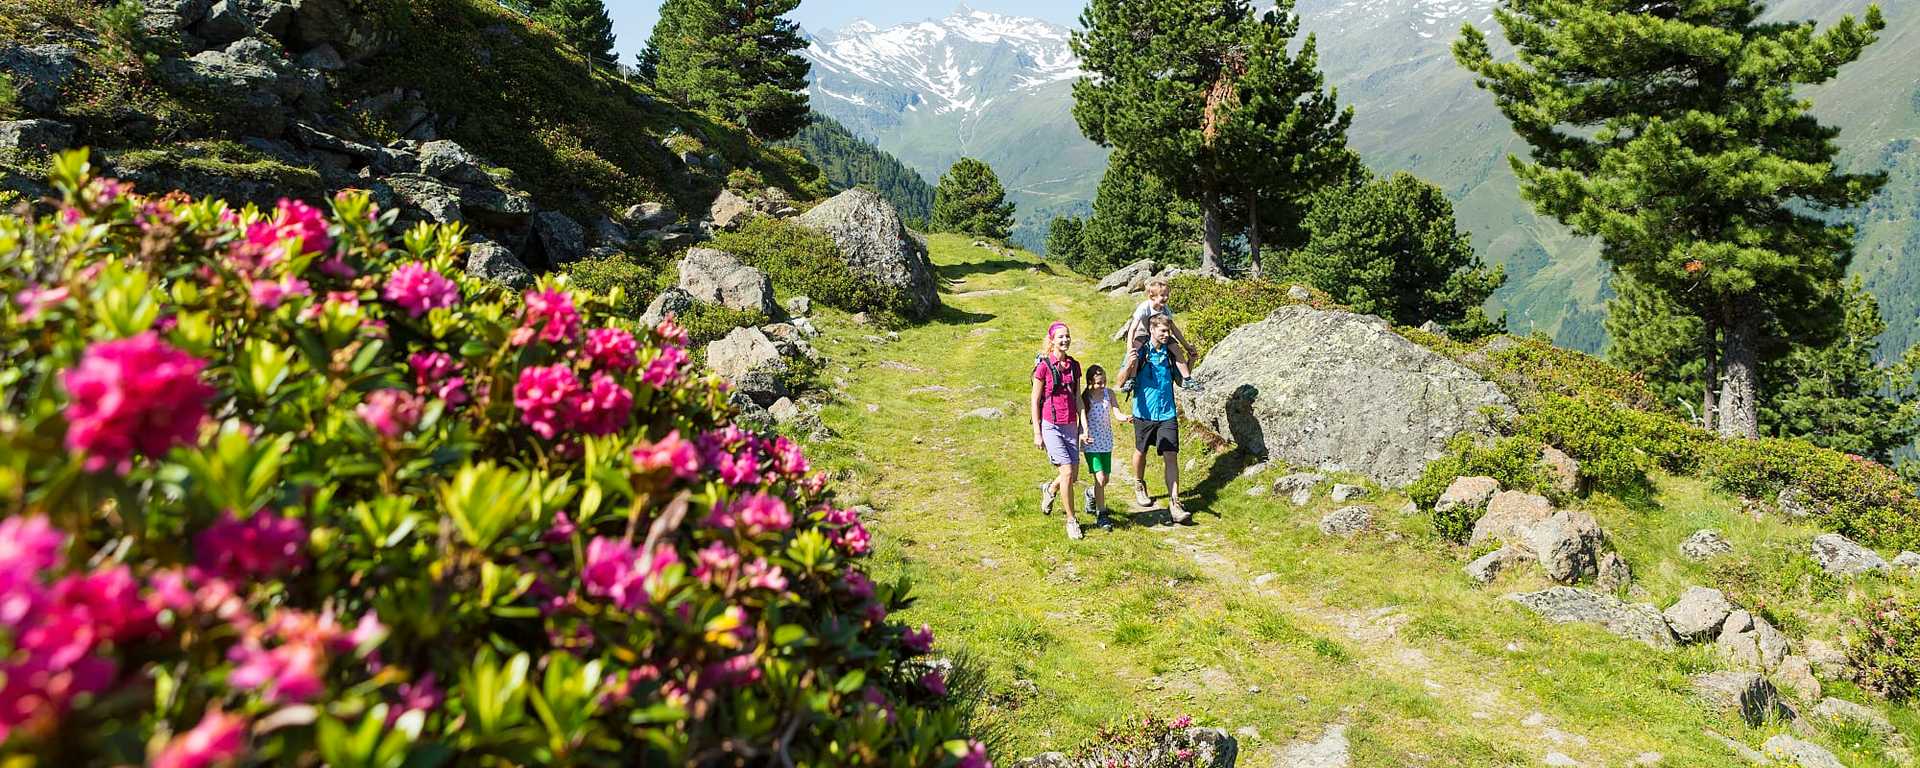 Family hiking in Sellraintal, Austria.  Photo courtesy of Innsbruck Tourismus / Mario Webhofer